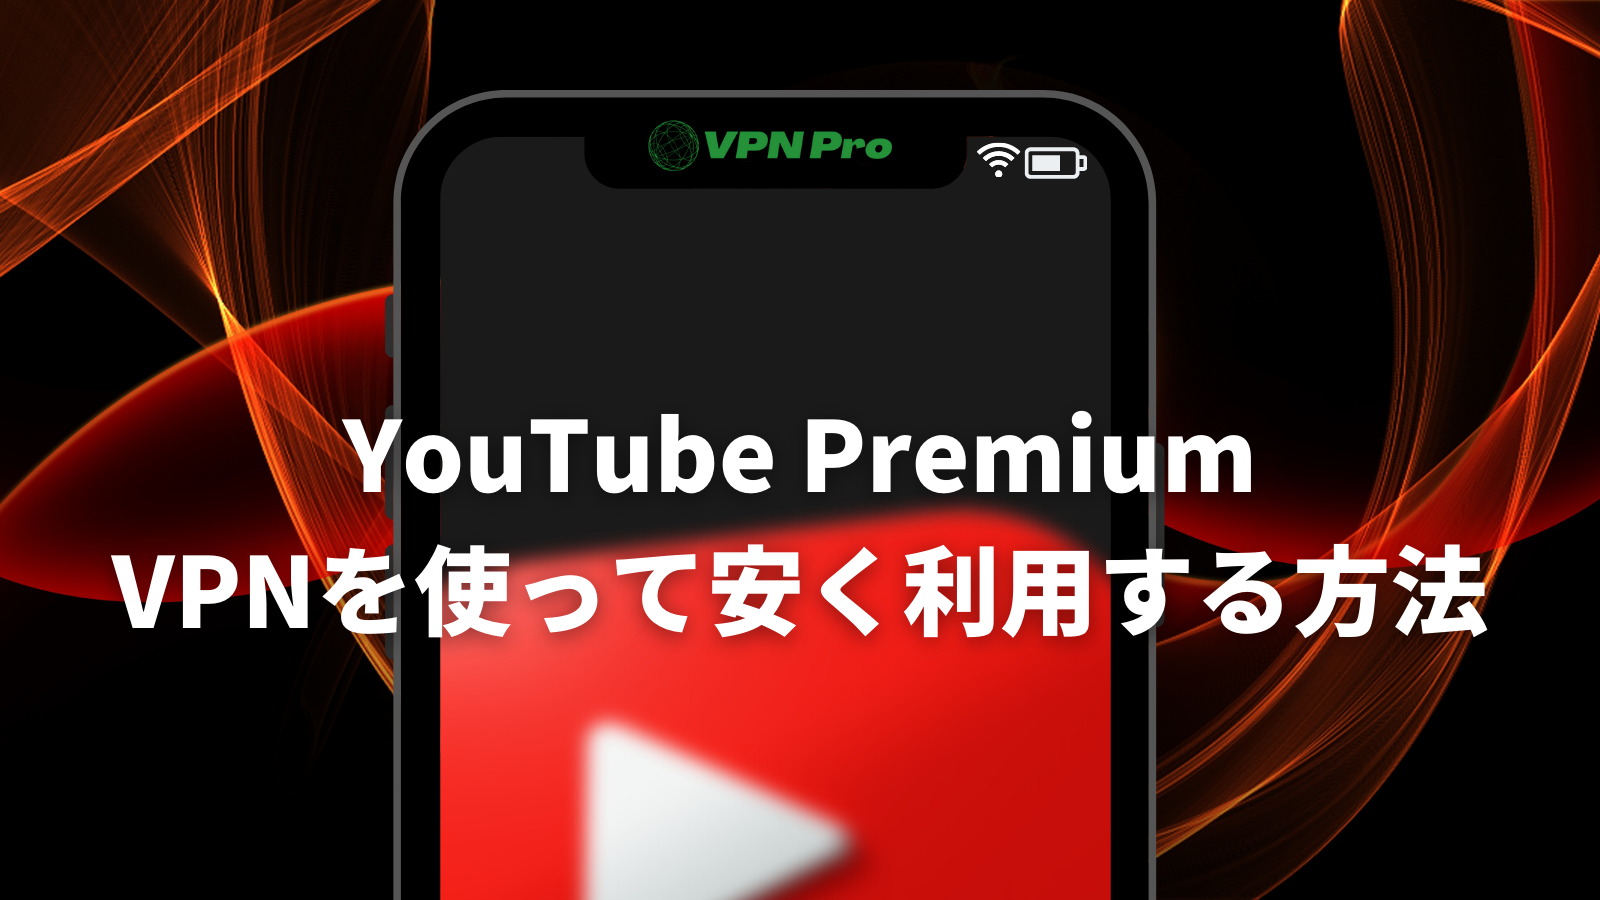 YouTube Premium VPNを使って安く利用する方法